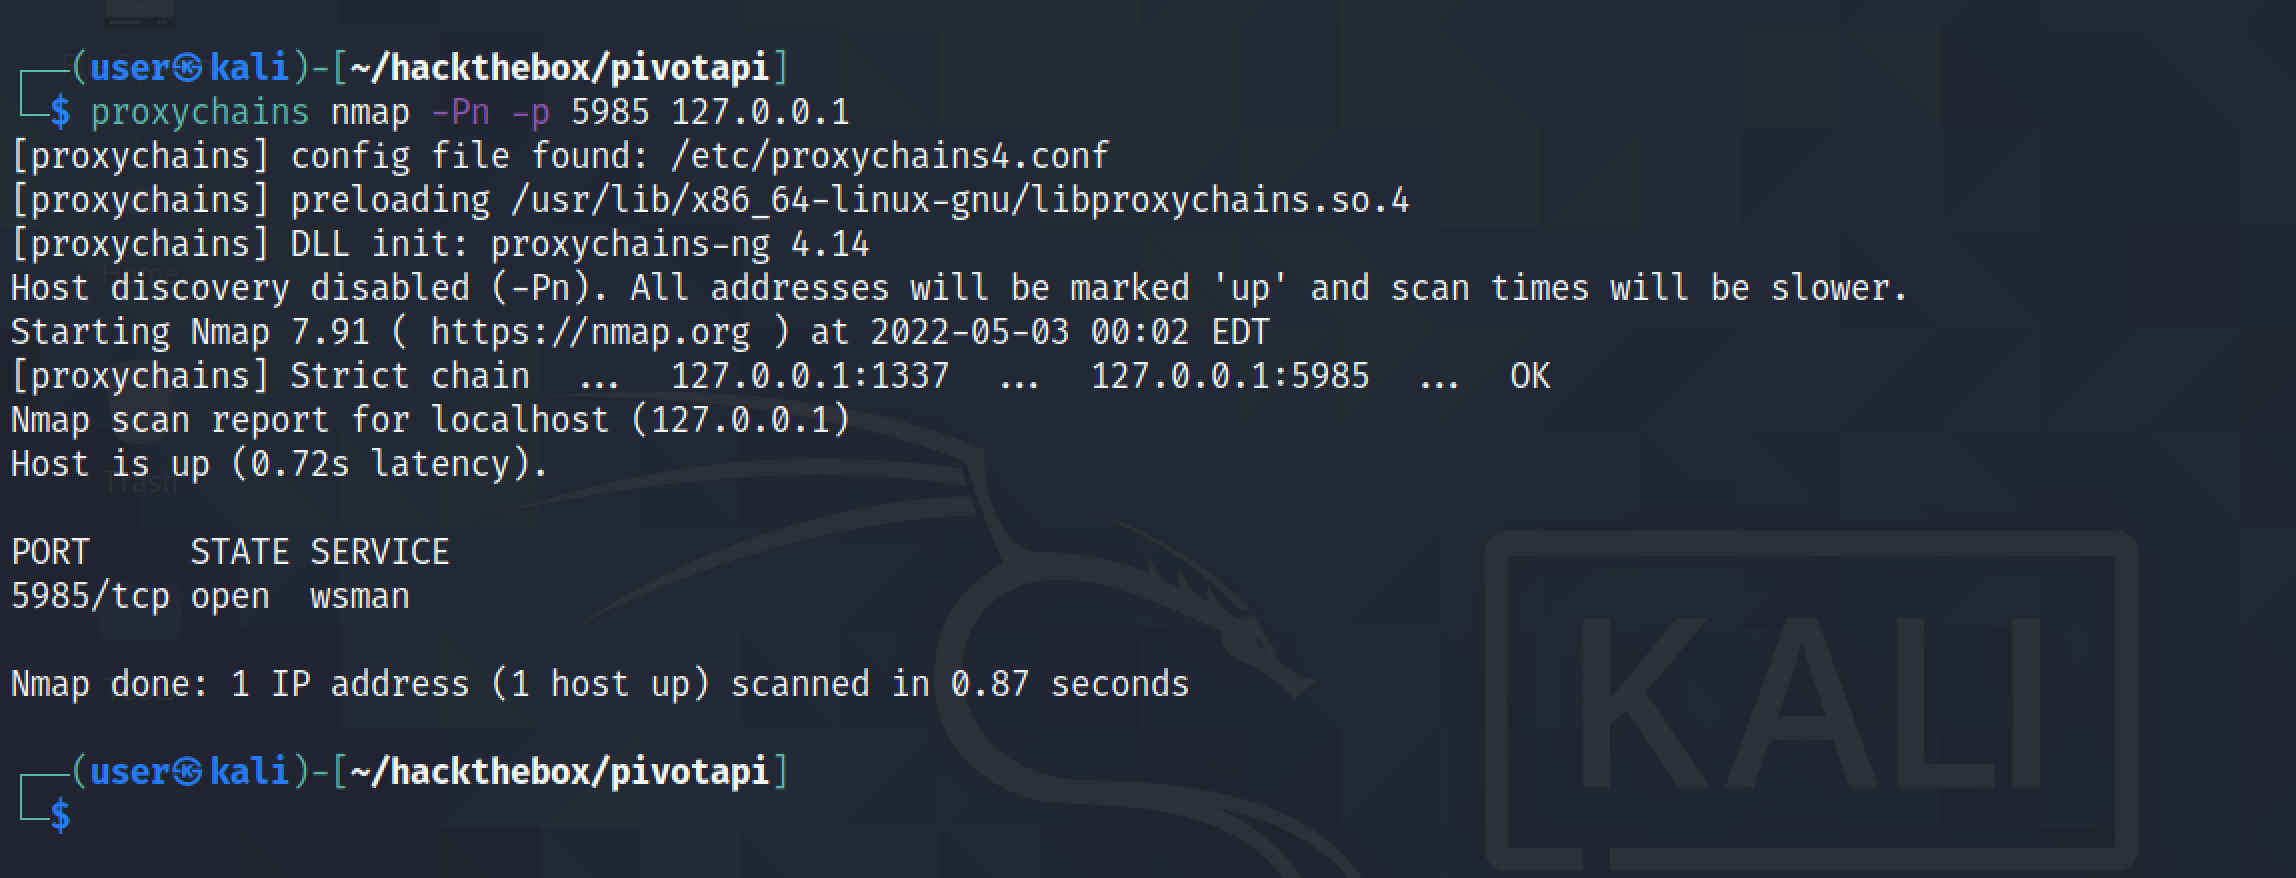 Scanning port 5985 through namp using proxychains.